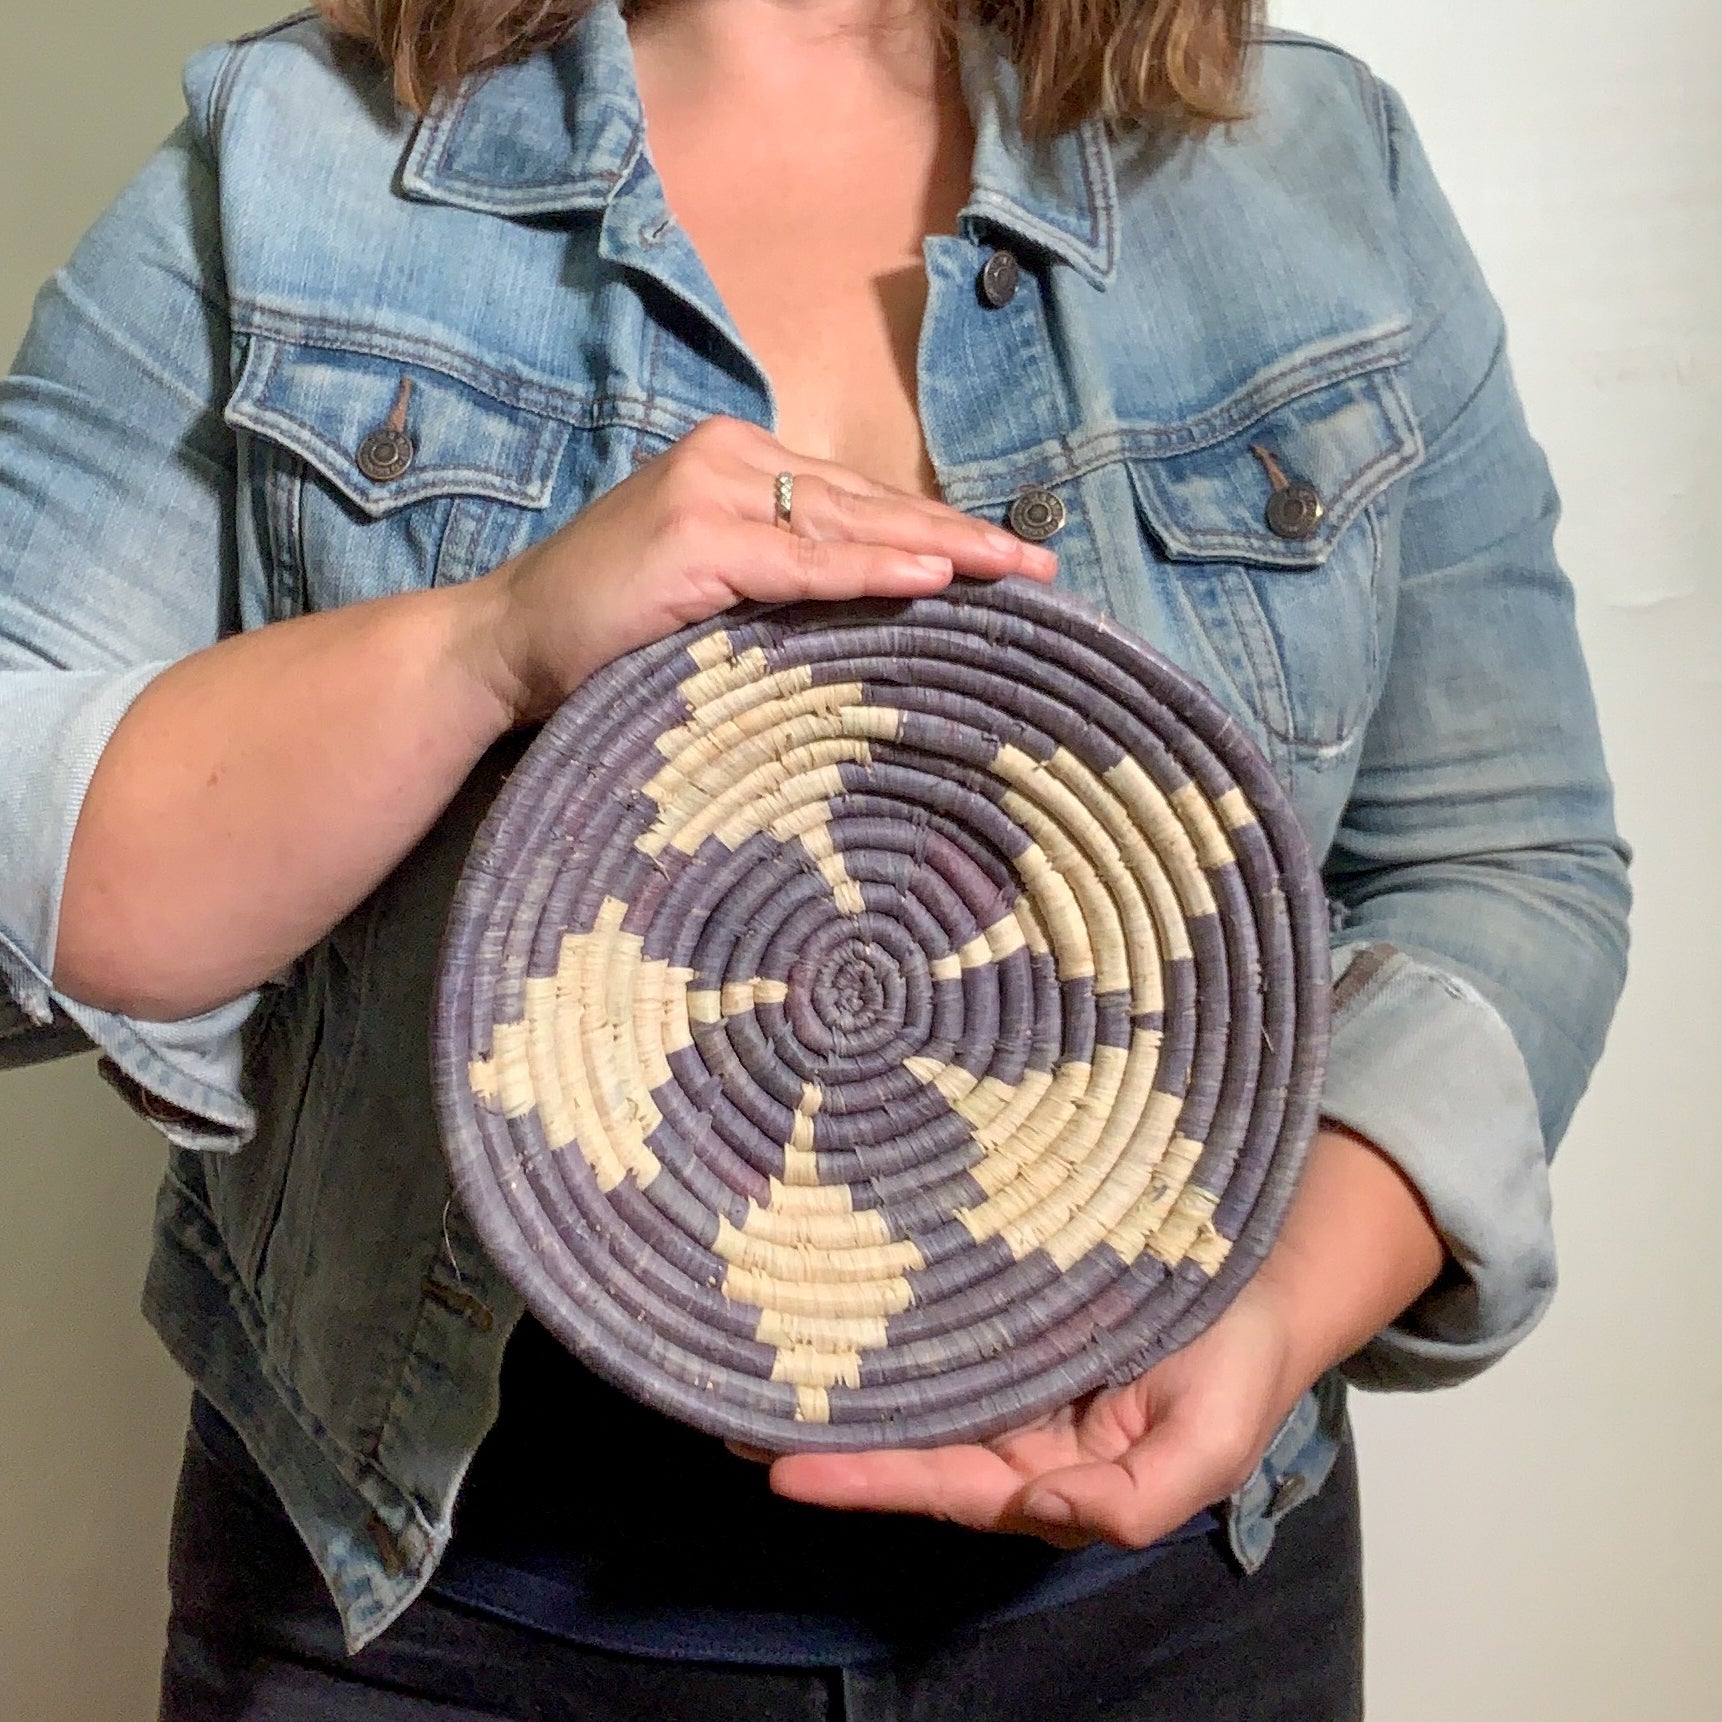 Fairtrade handwoven round blue-grey JustOne basket